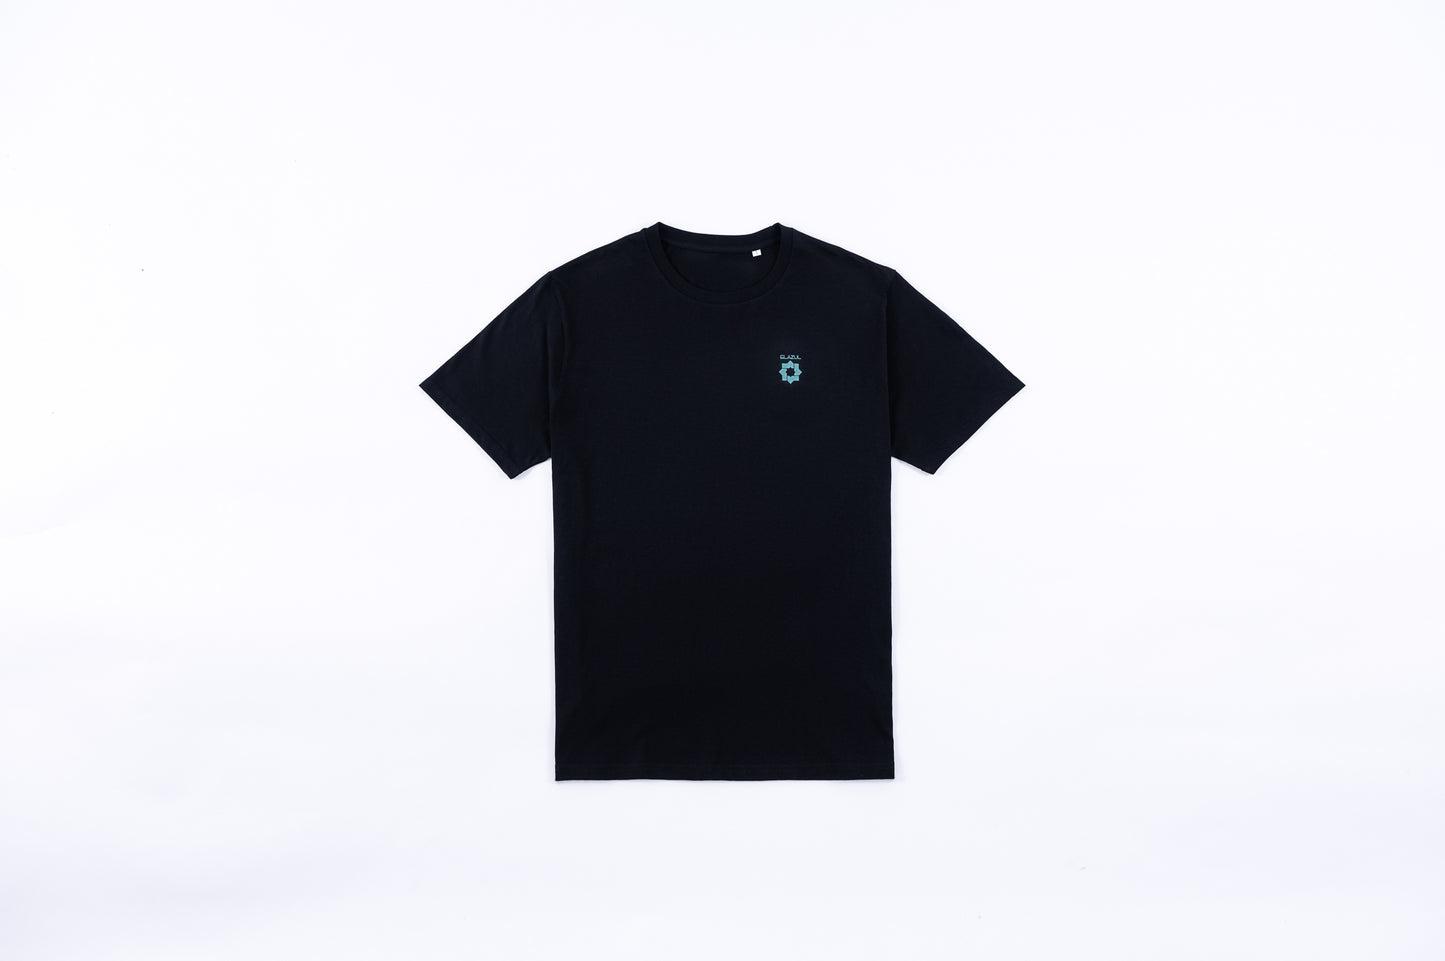 Diseño frontal de logo ELAZUL sobre camiseta de manga corta unisex color negro